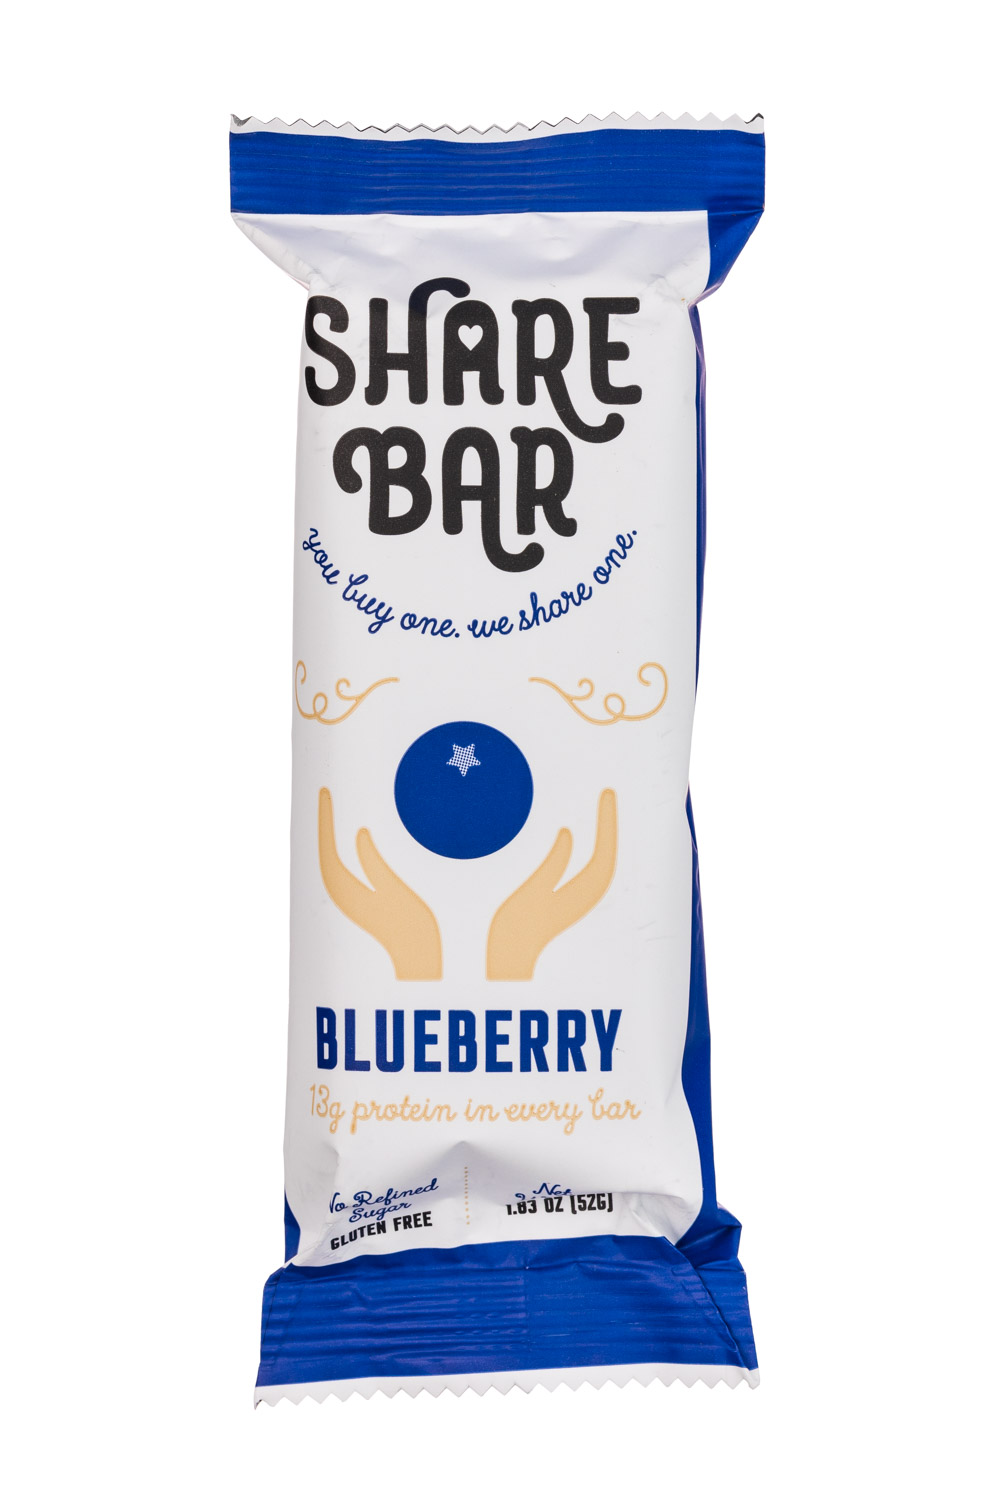 Blueberry Share Bar